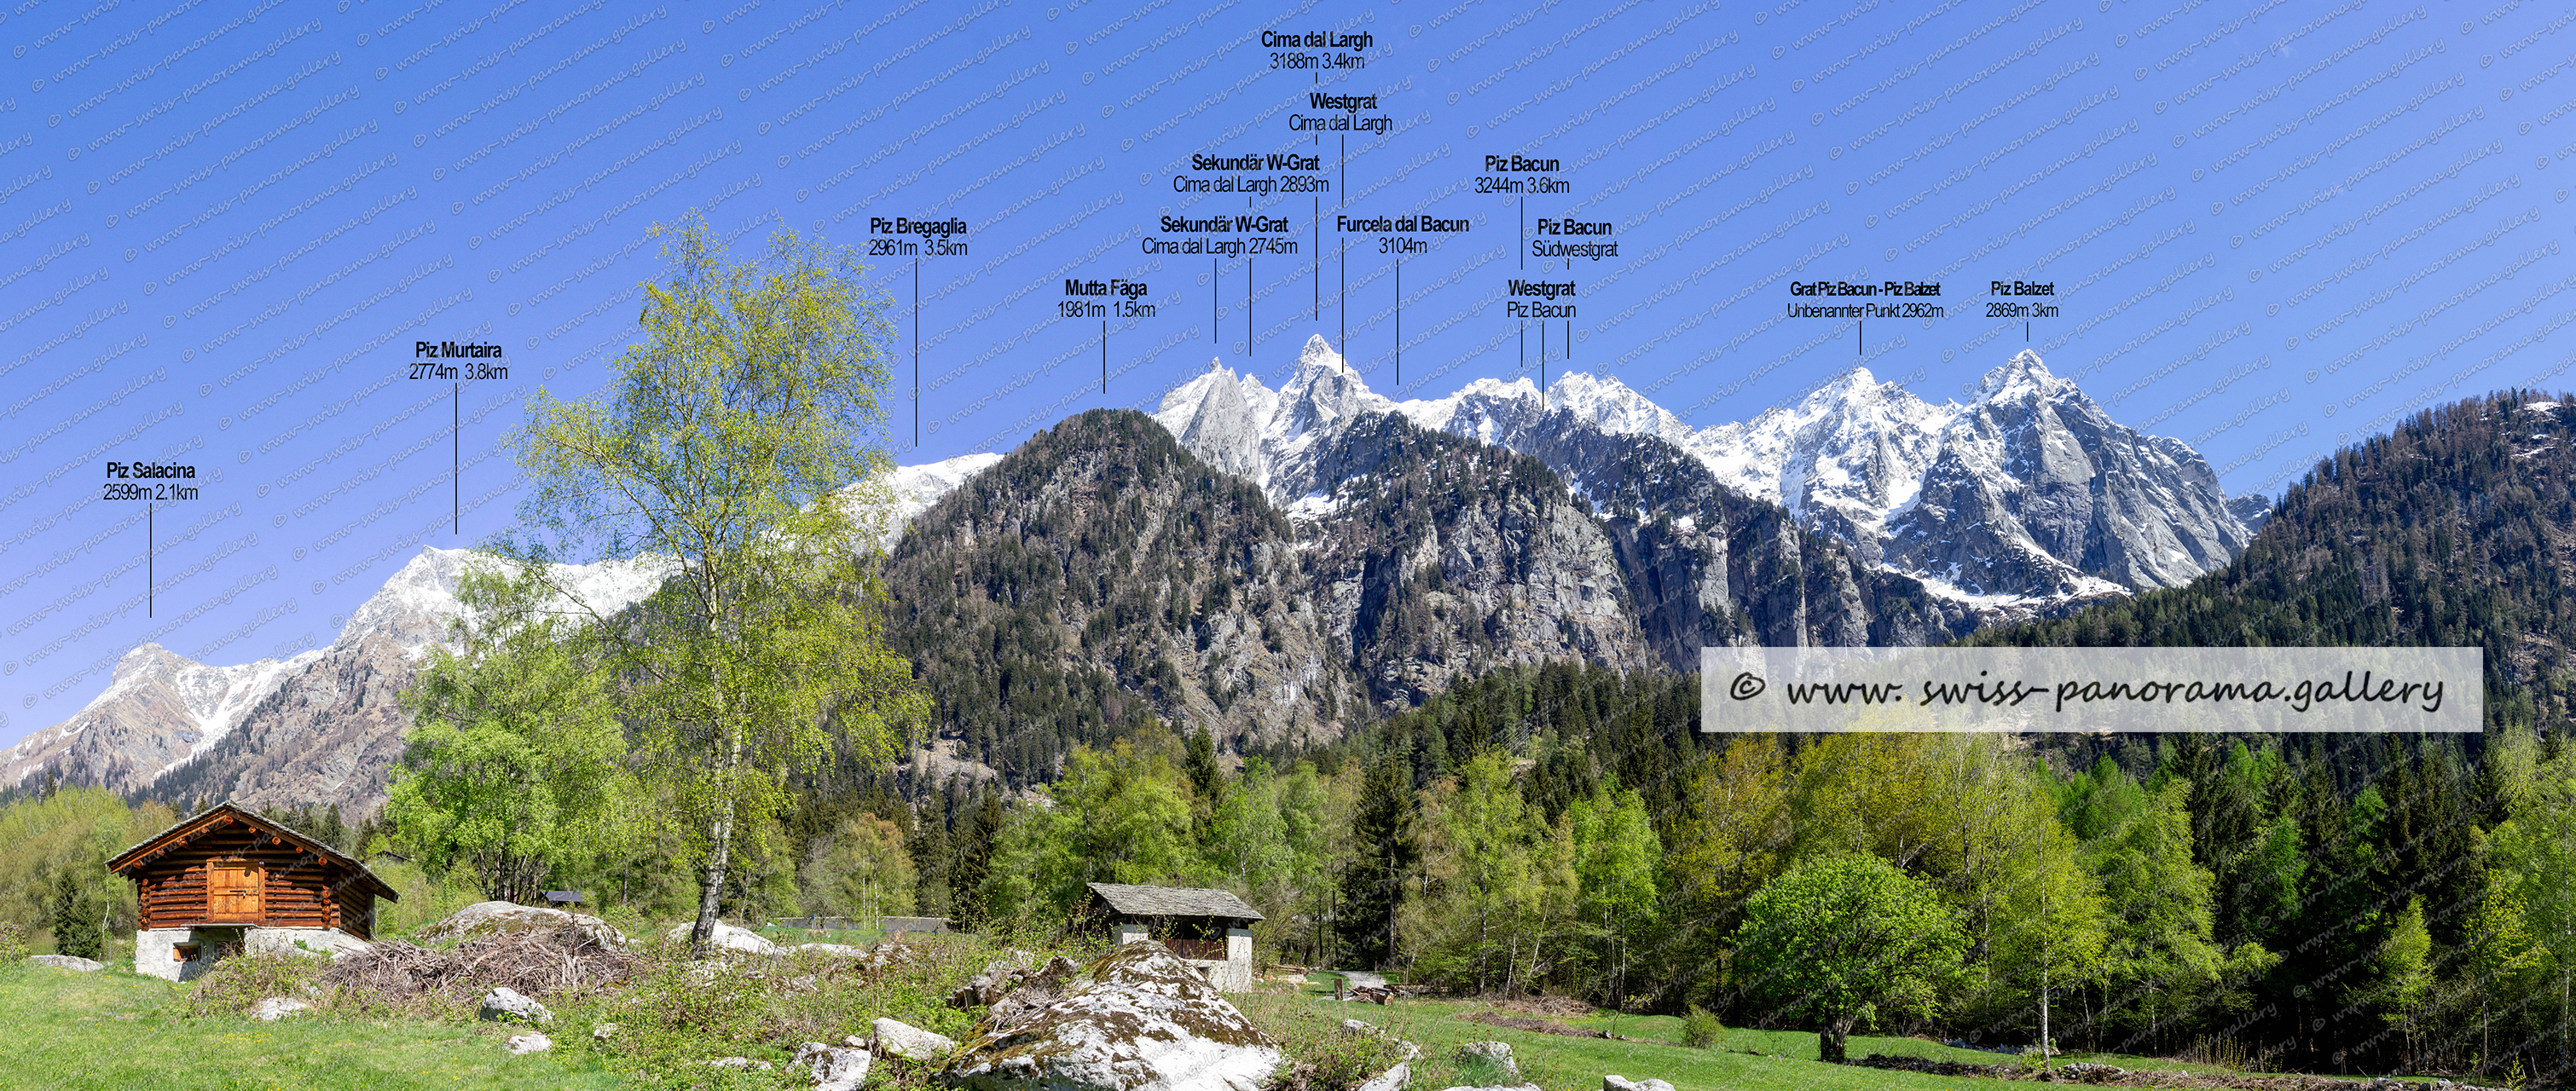 Schweizer Alpenpanorama, Bregaglia, Blick vom Bergell zu den Gipfeln  Gipfeln der Cima dal Largh und Piz Bacun swiss panorama.gallery